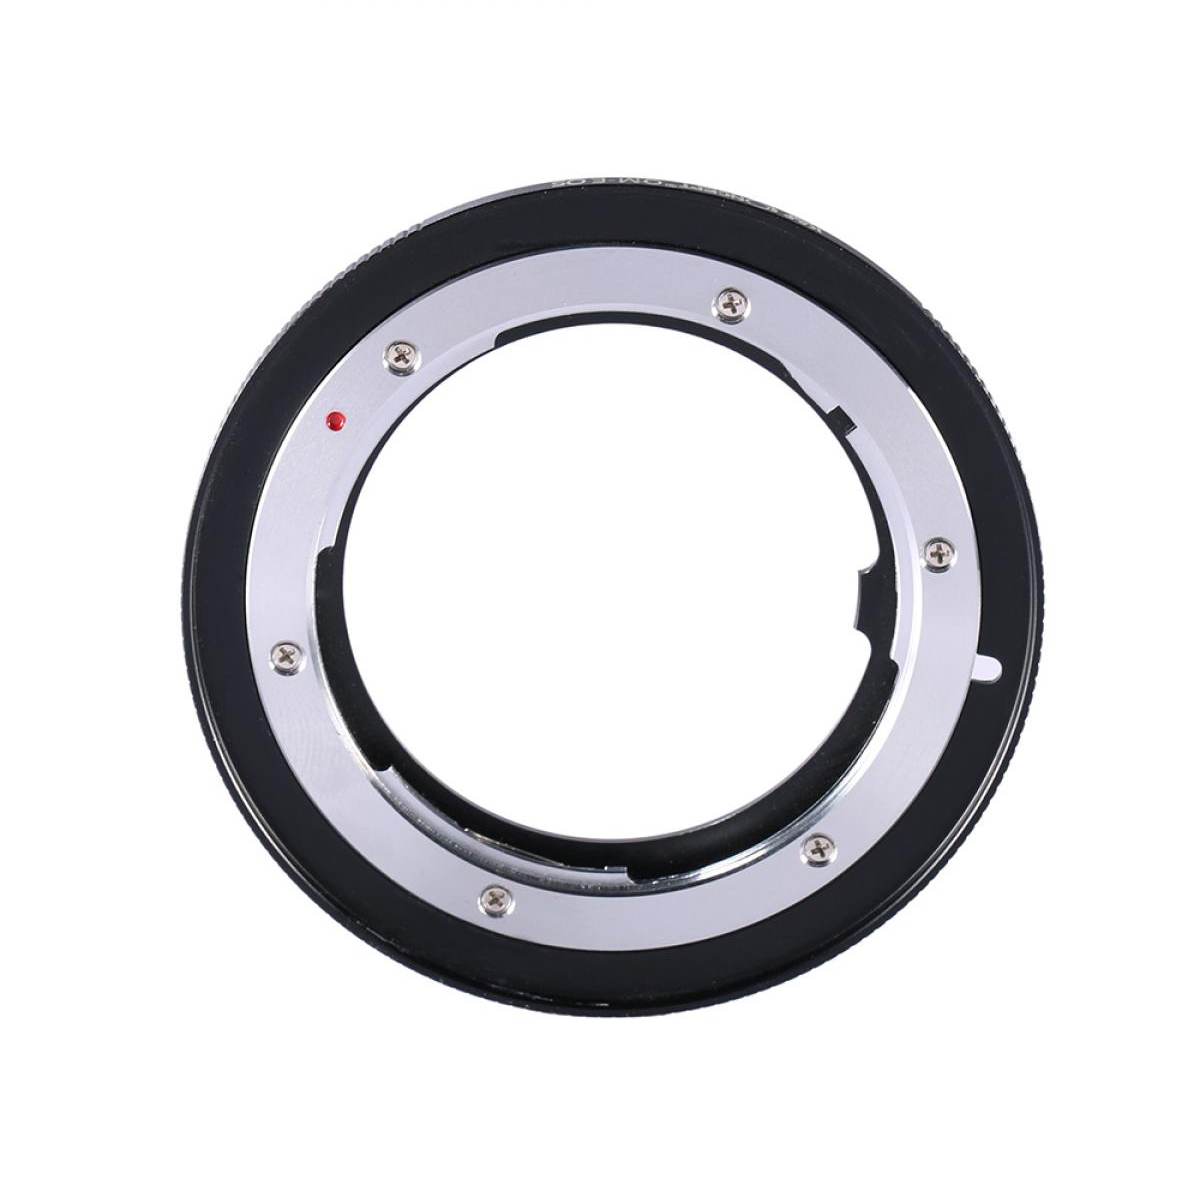 K&F Concept High Precision Lens Adapter KF06.132 for OM-EOS